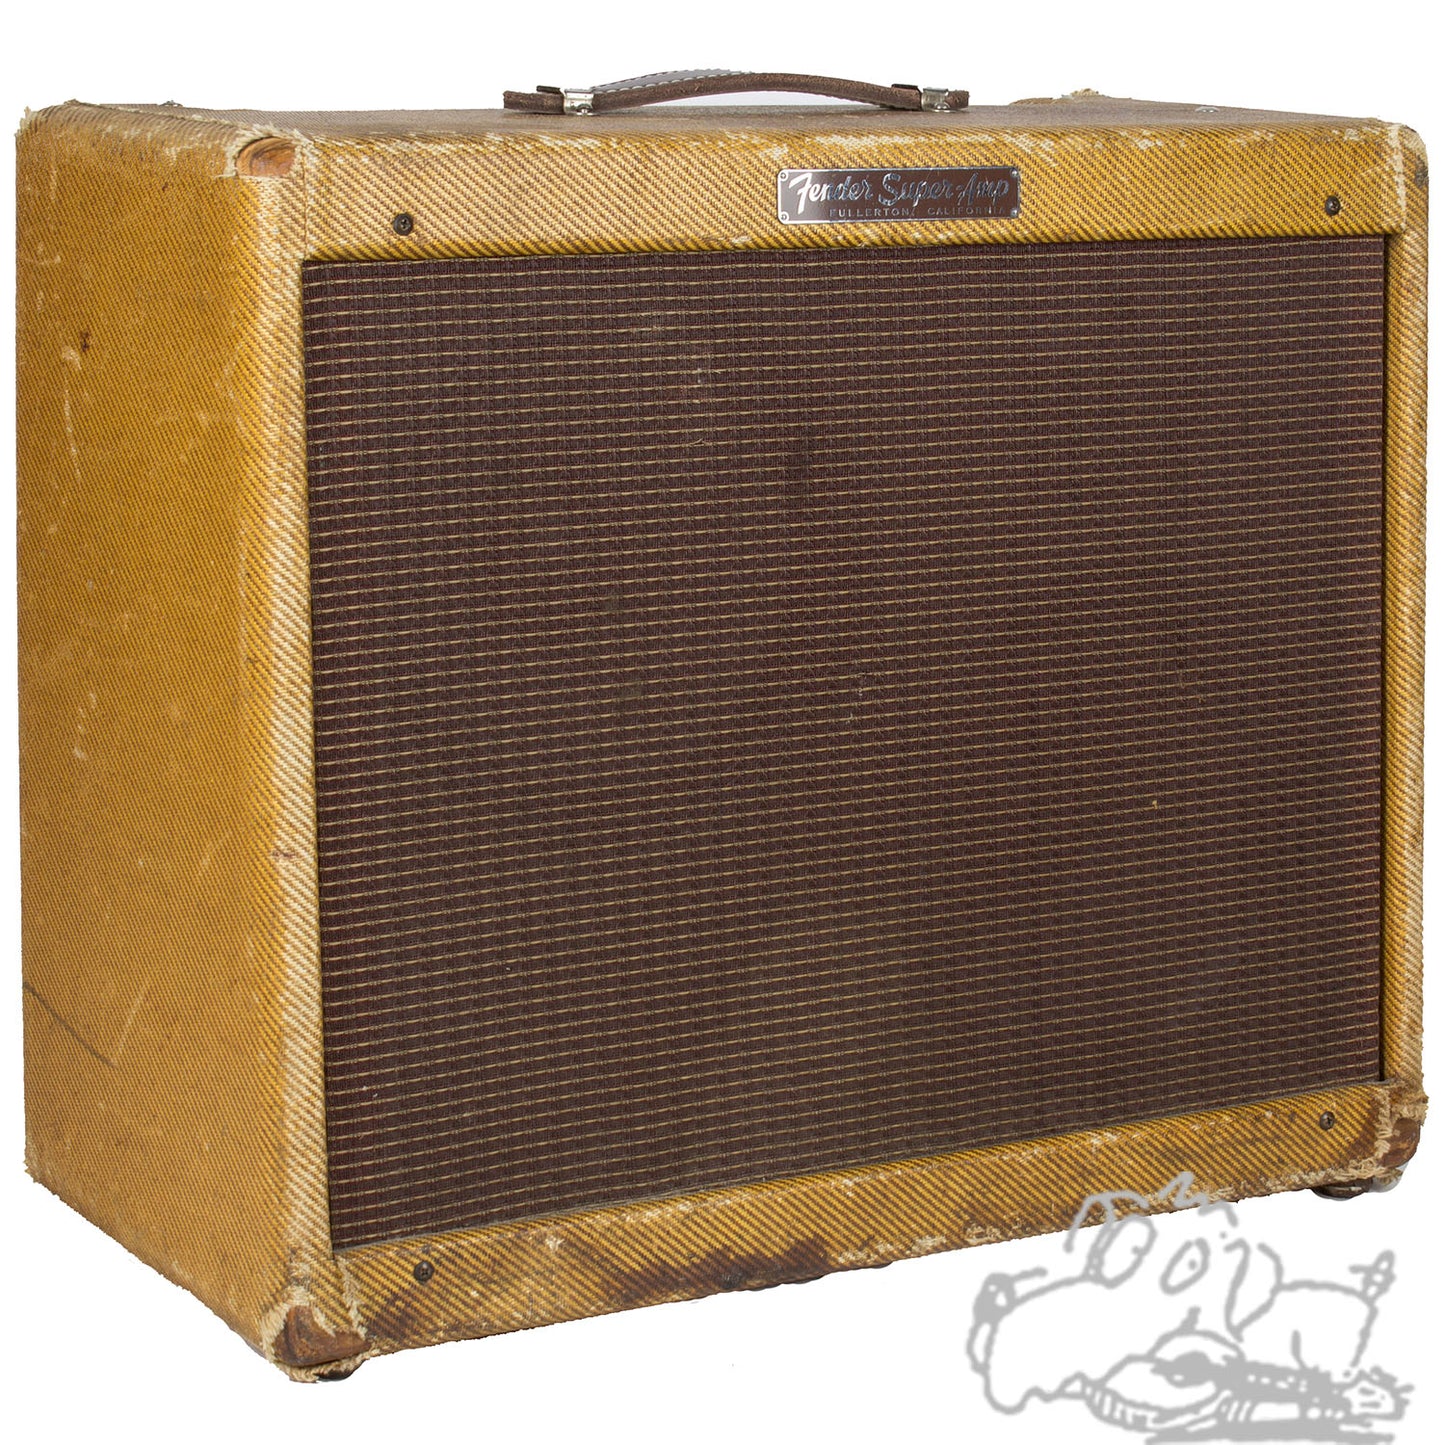 1958 Fender Super Amp